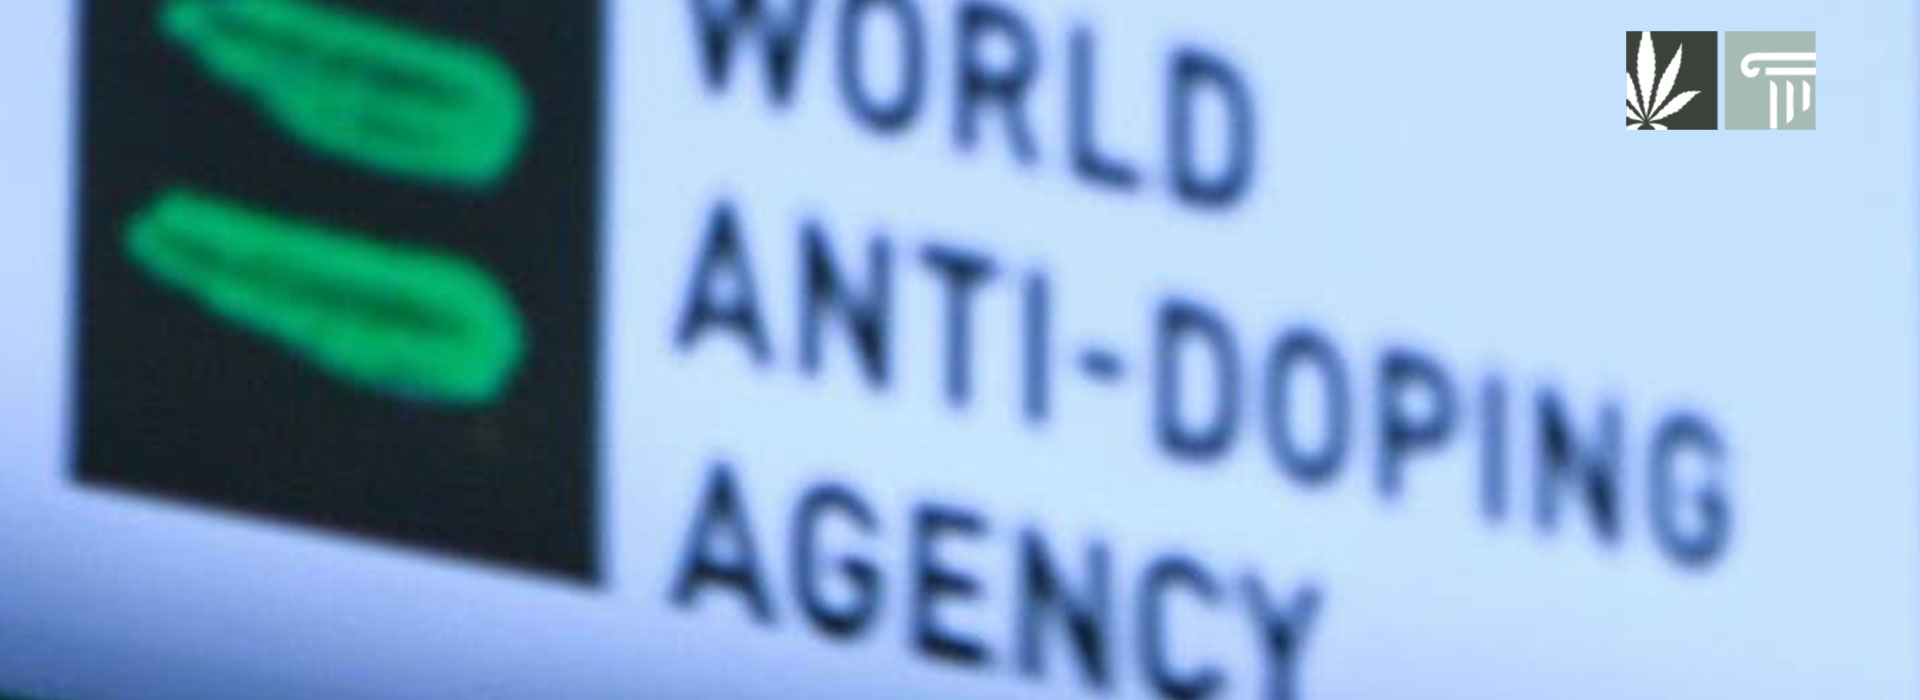 world anti doping agency us ban shacarri richardson suspension